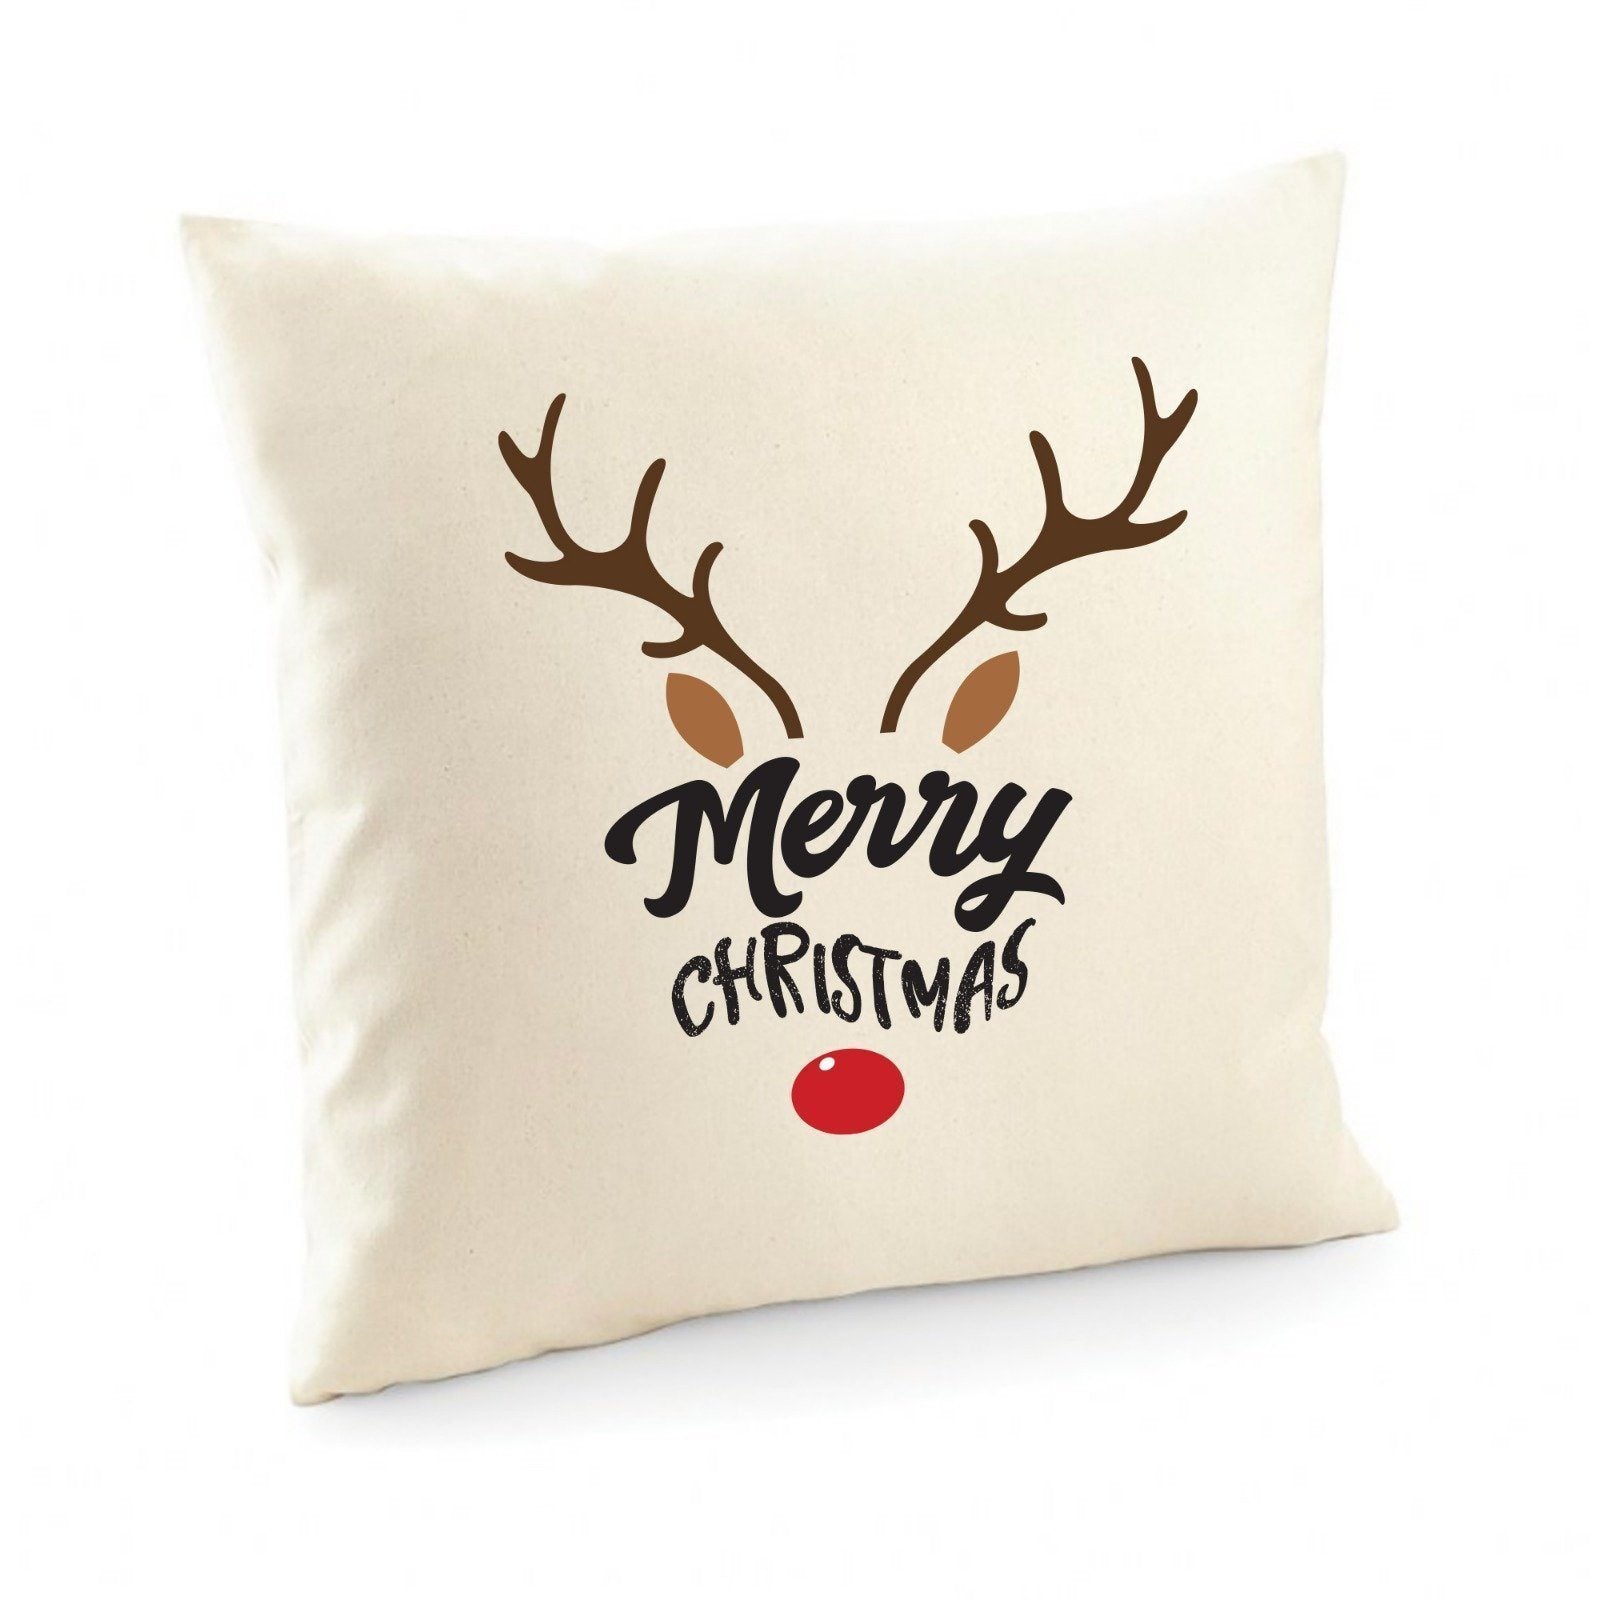 Reindeer Merry Christmas Cushion Cover, Rudolph Christmas Decorations, Home Decor